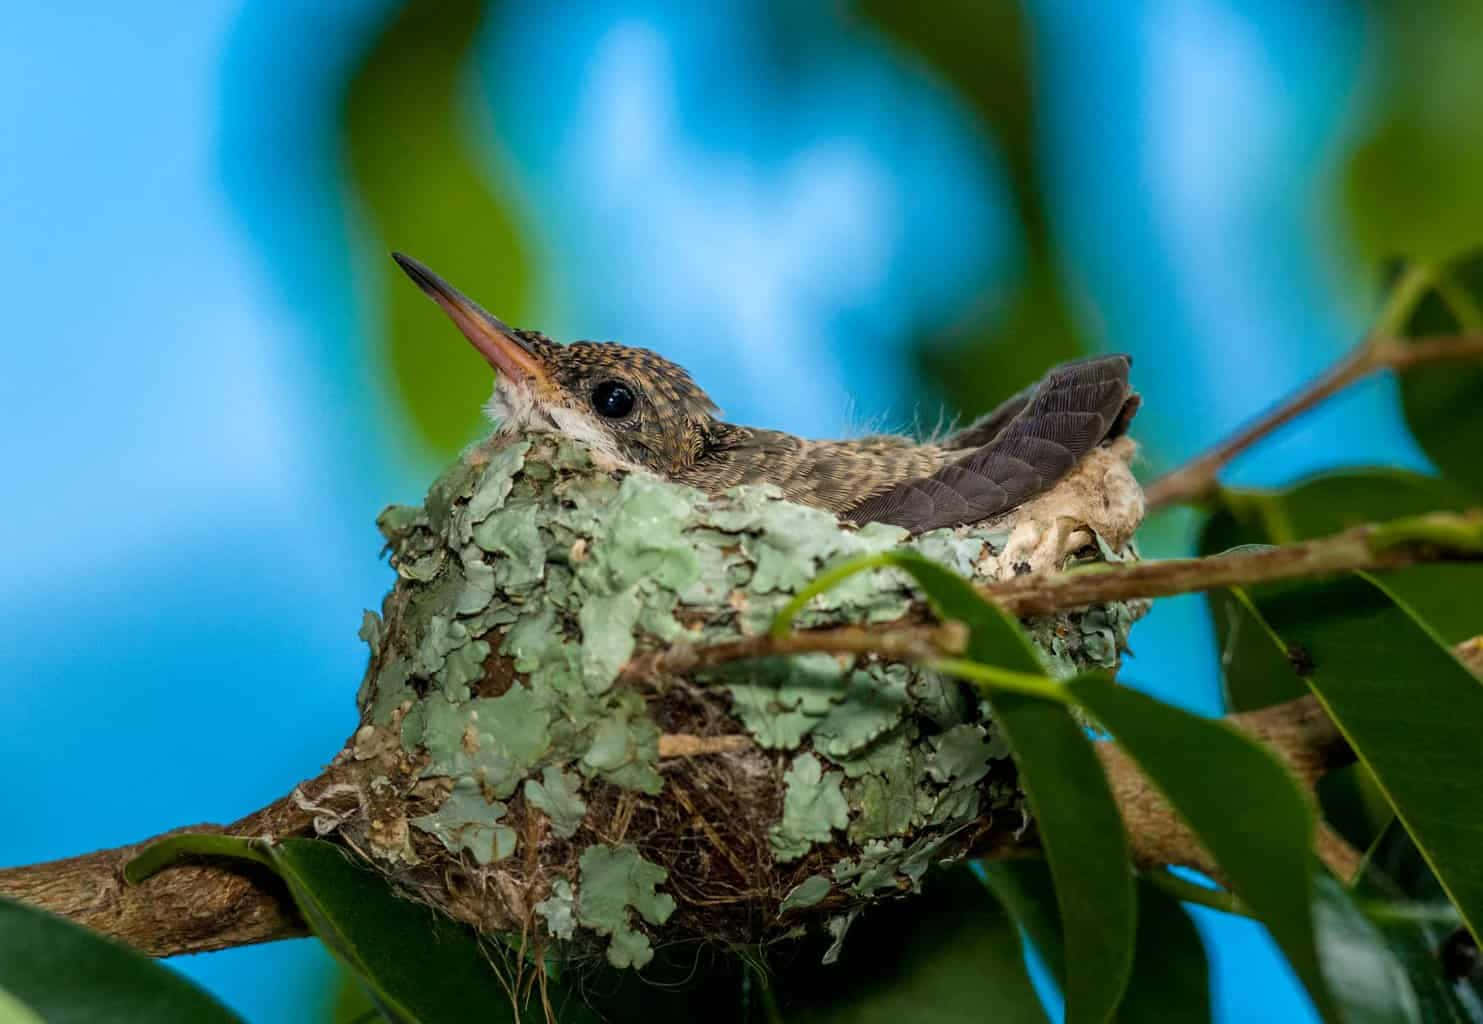 Hummingbird nest nestled in a tree